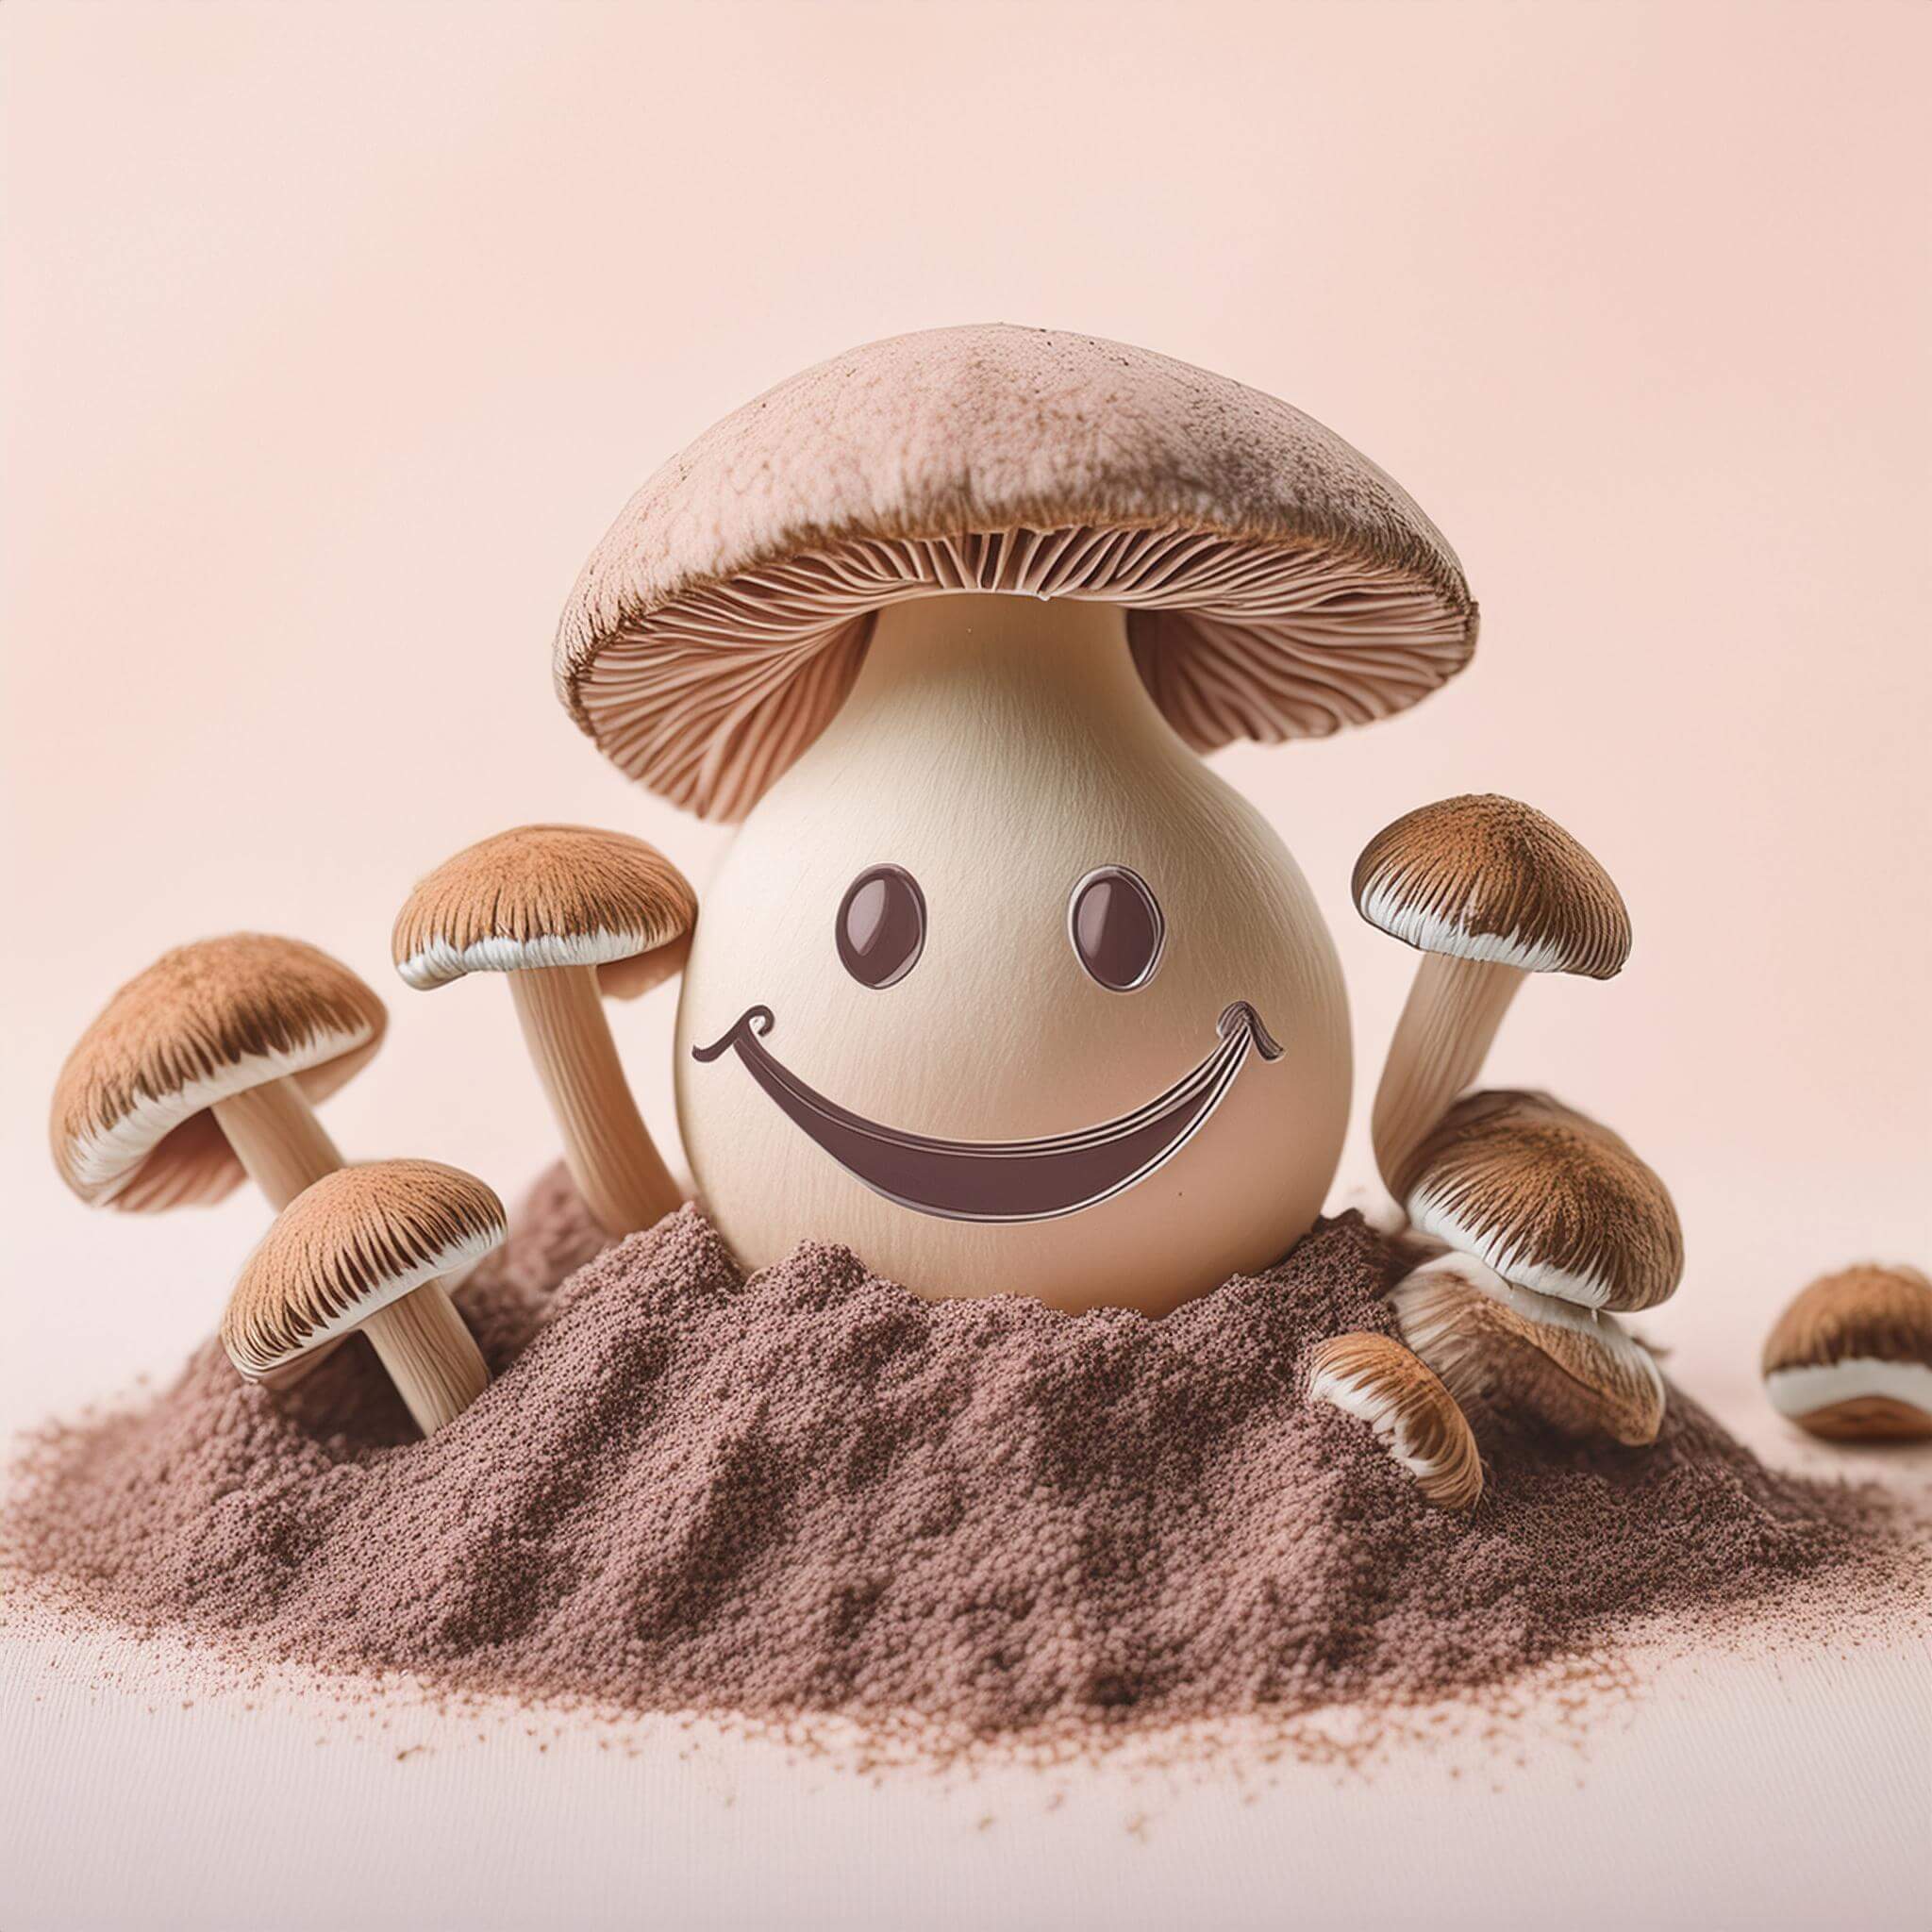 drawing of mushrooms and mushroom powder and a smiley illustrating mushrooms for mood